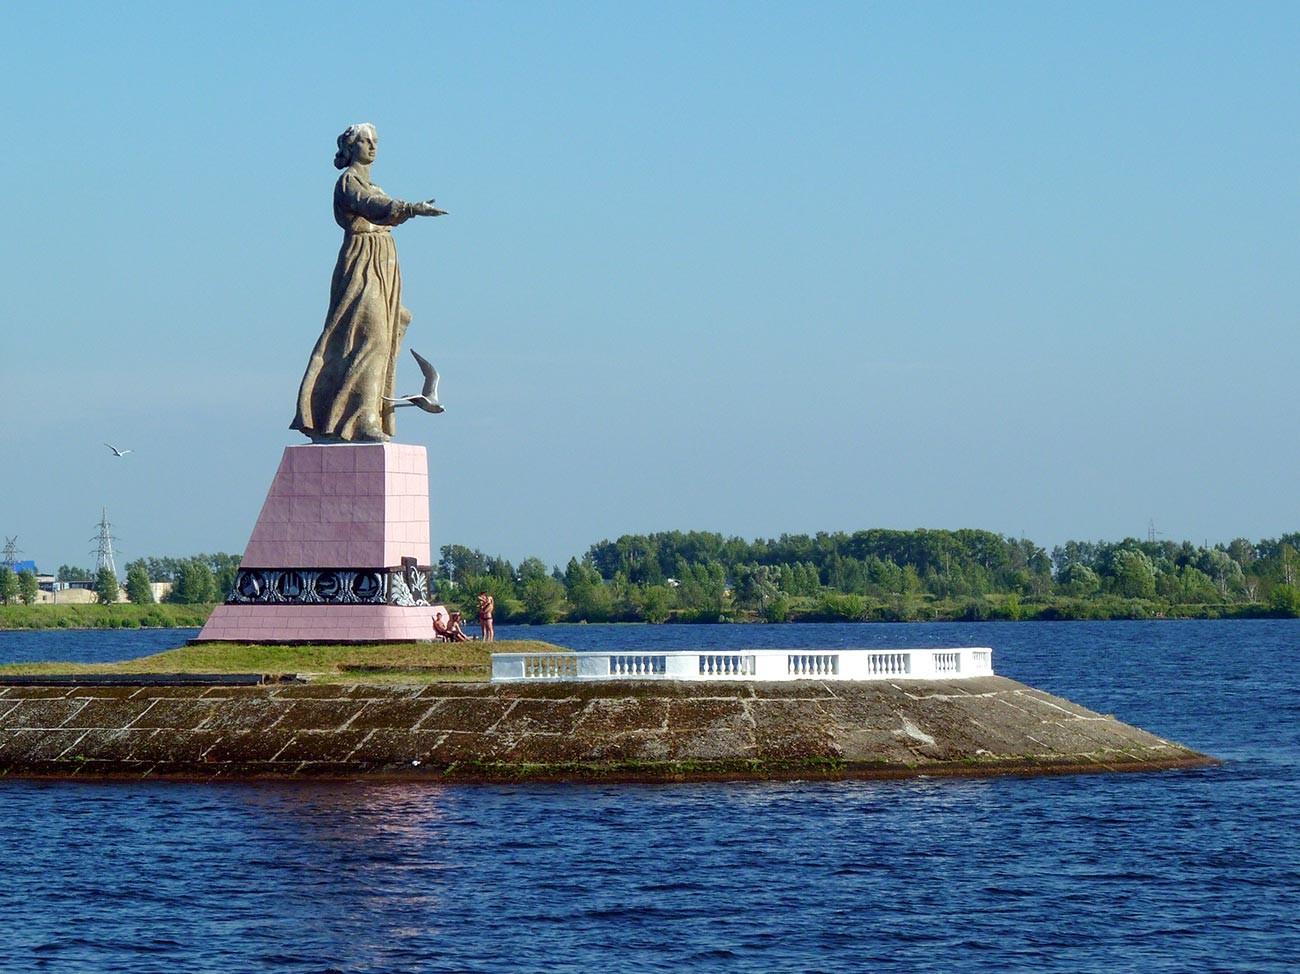 Monumen Bunda Volga

